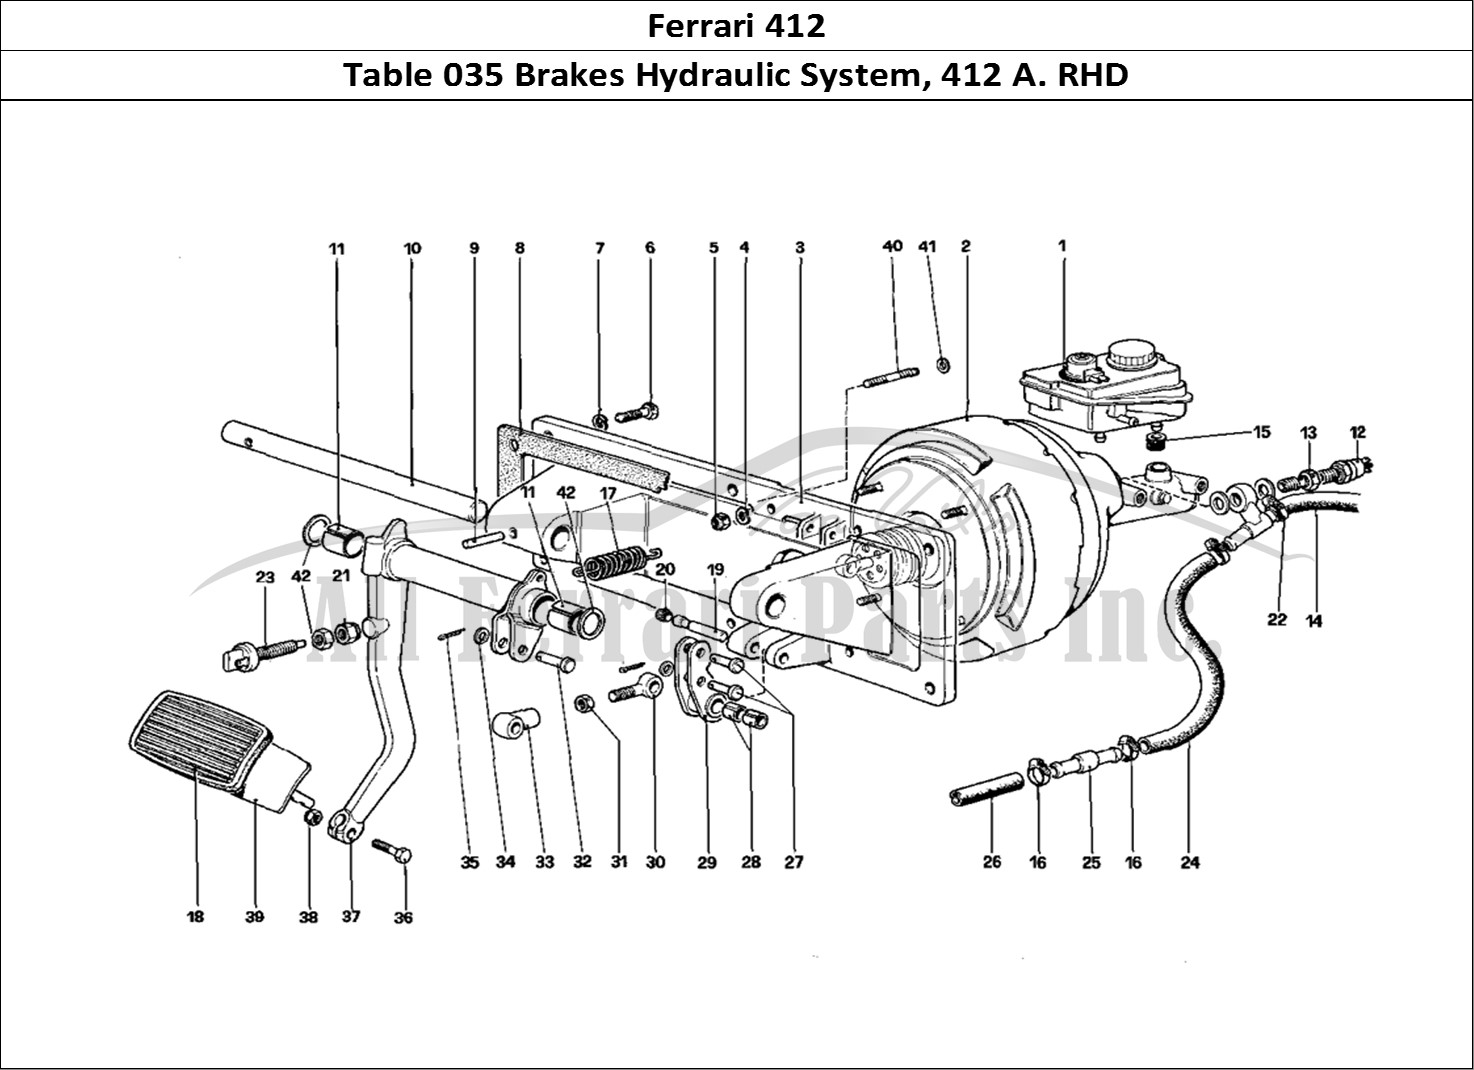 Ferrari Parts Ferrari 412 (Mechanical) Page 035 Brakes Hydraulic Control